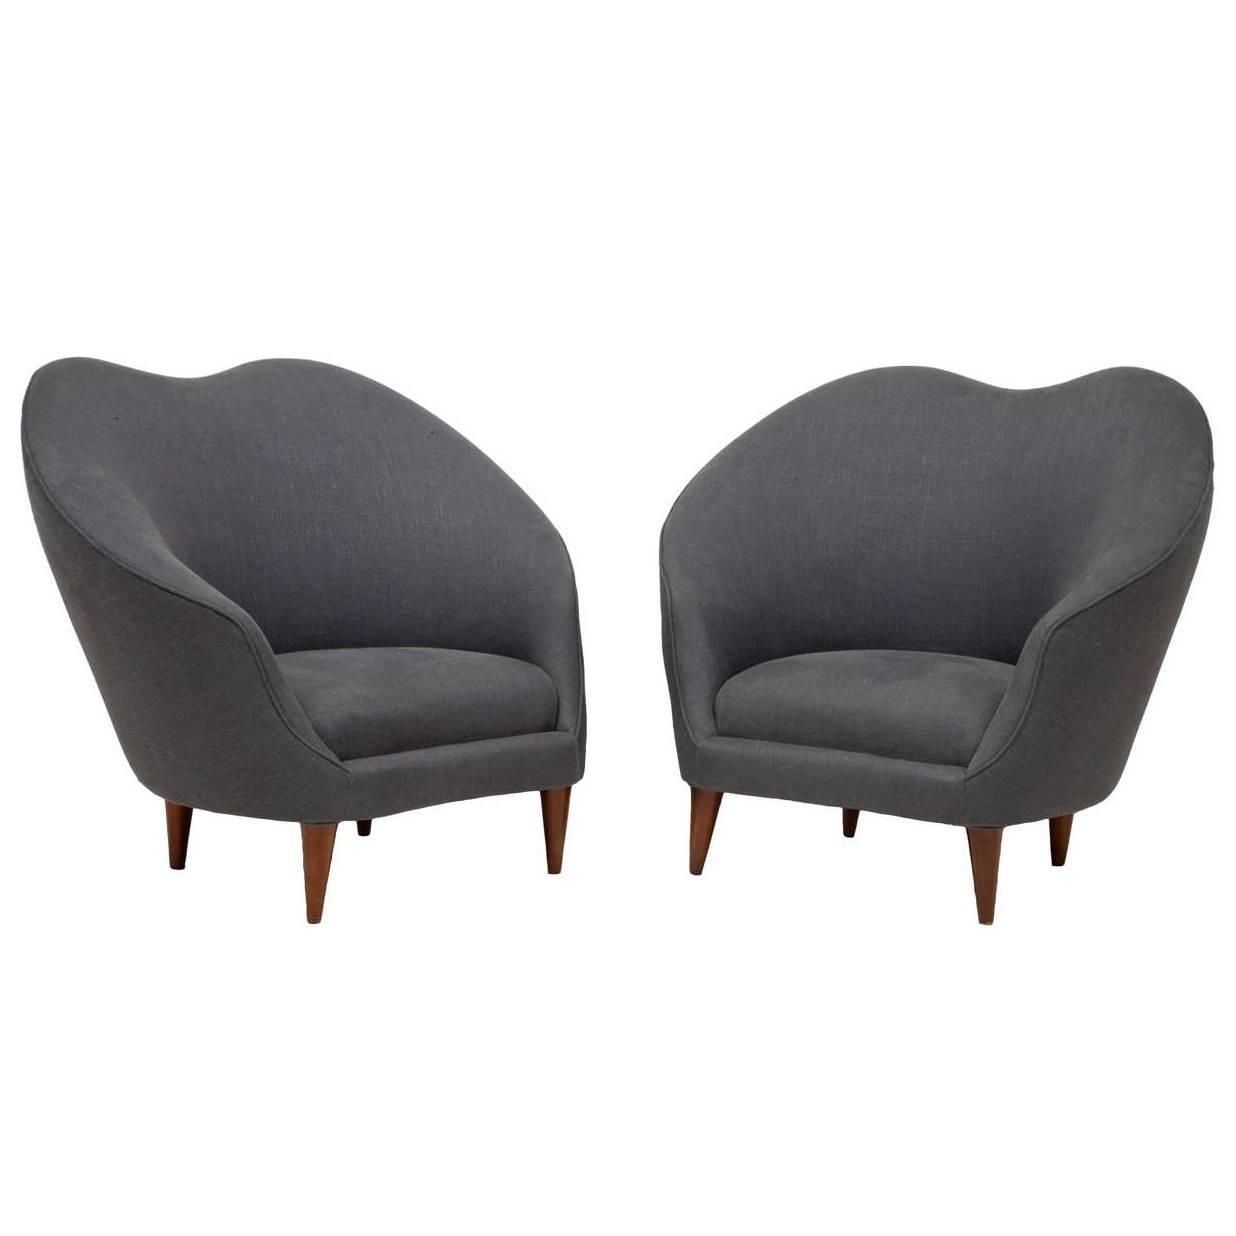 Munari Chairs – Caira Mandaglio With Regard To Latest Caira Black Upholstered Arm Chairs (View 6 of 20)